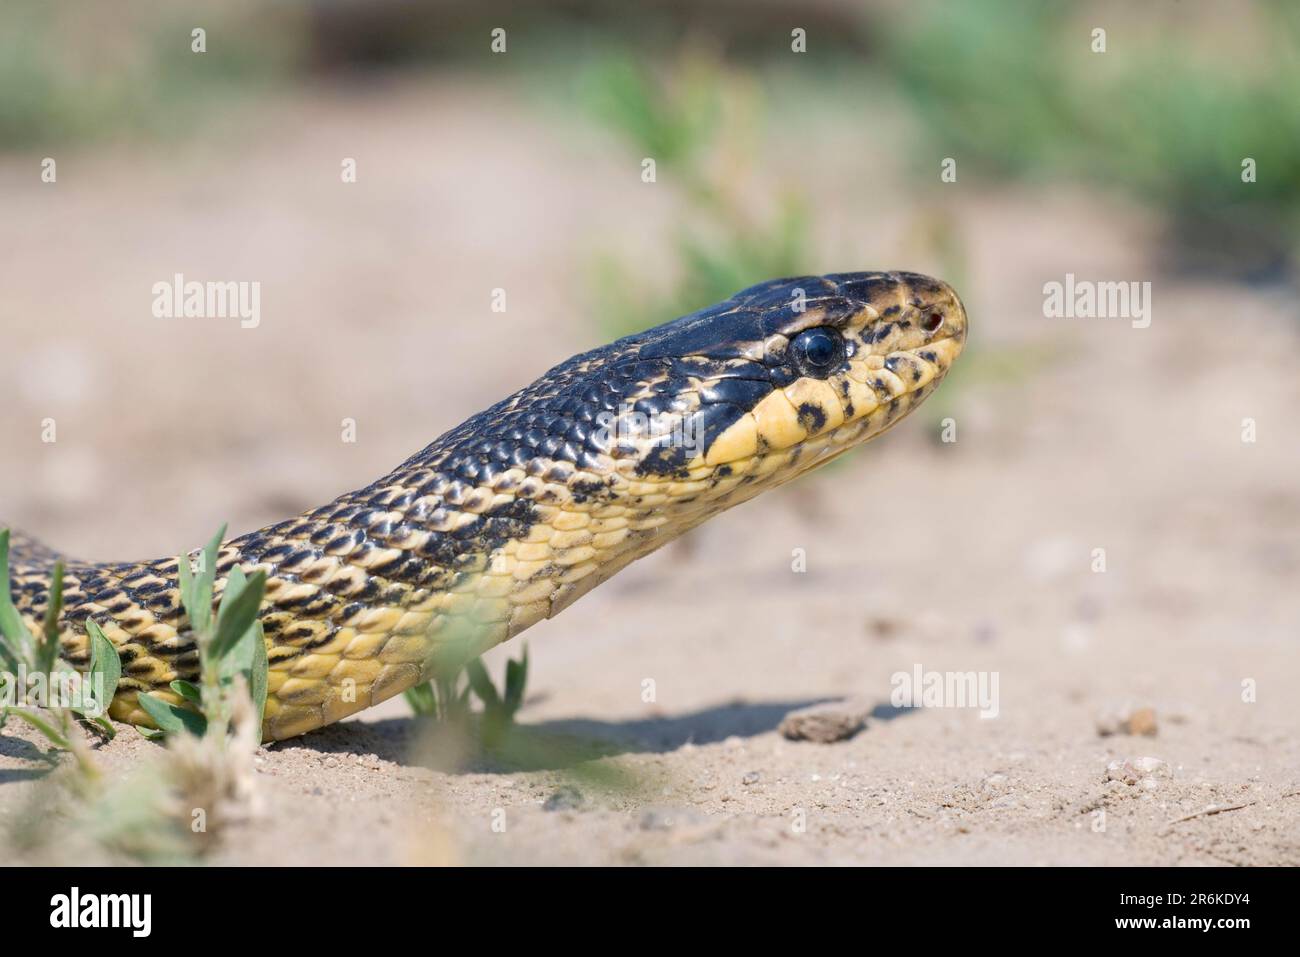 Four-lined Snake (Elaphe quatuorlineata), Bulgaria Stock Photo